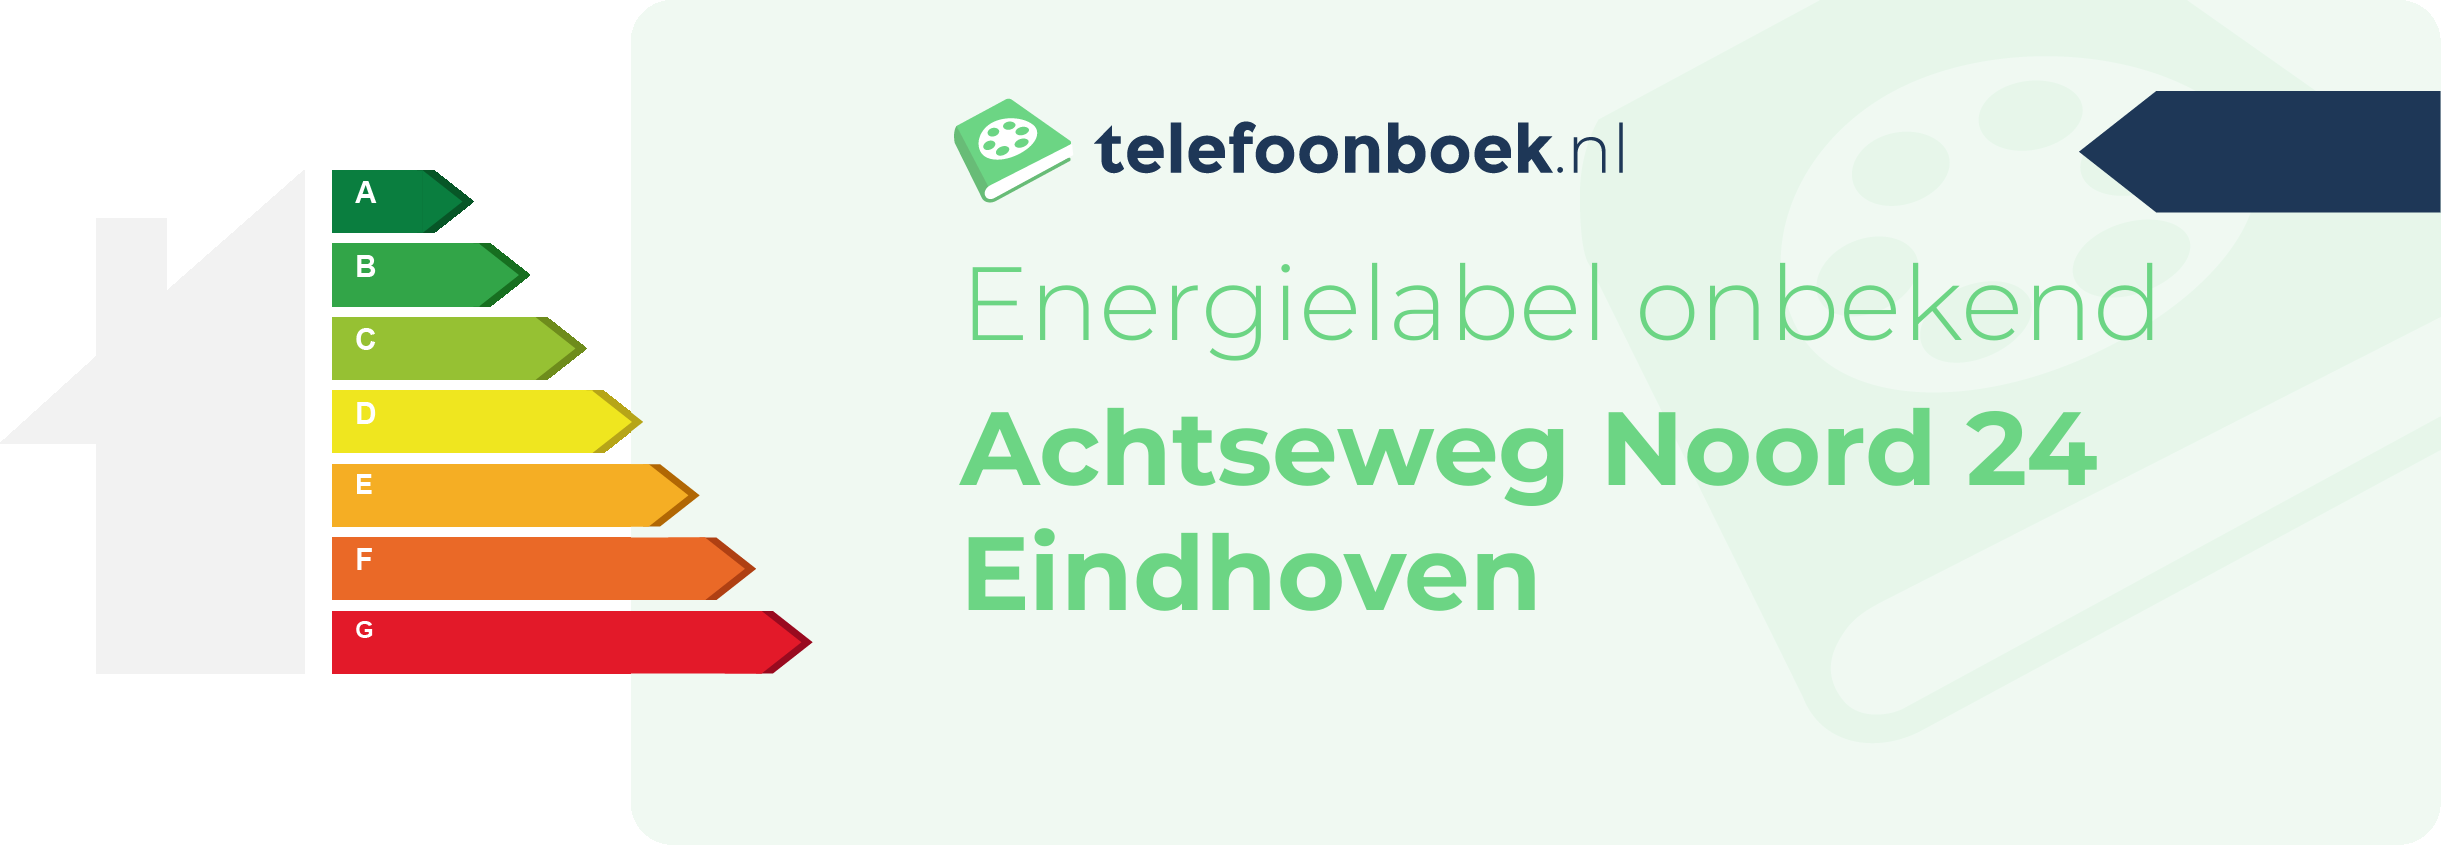 Energielabel Achtseweg Noord 24 Eindhoven